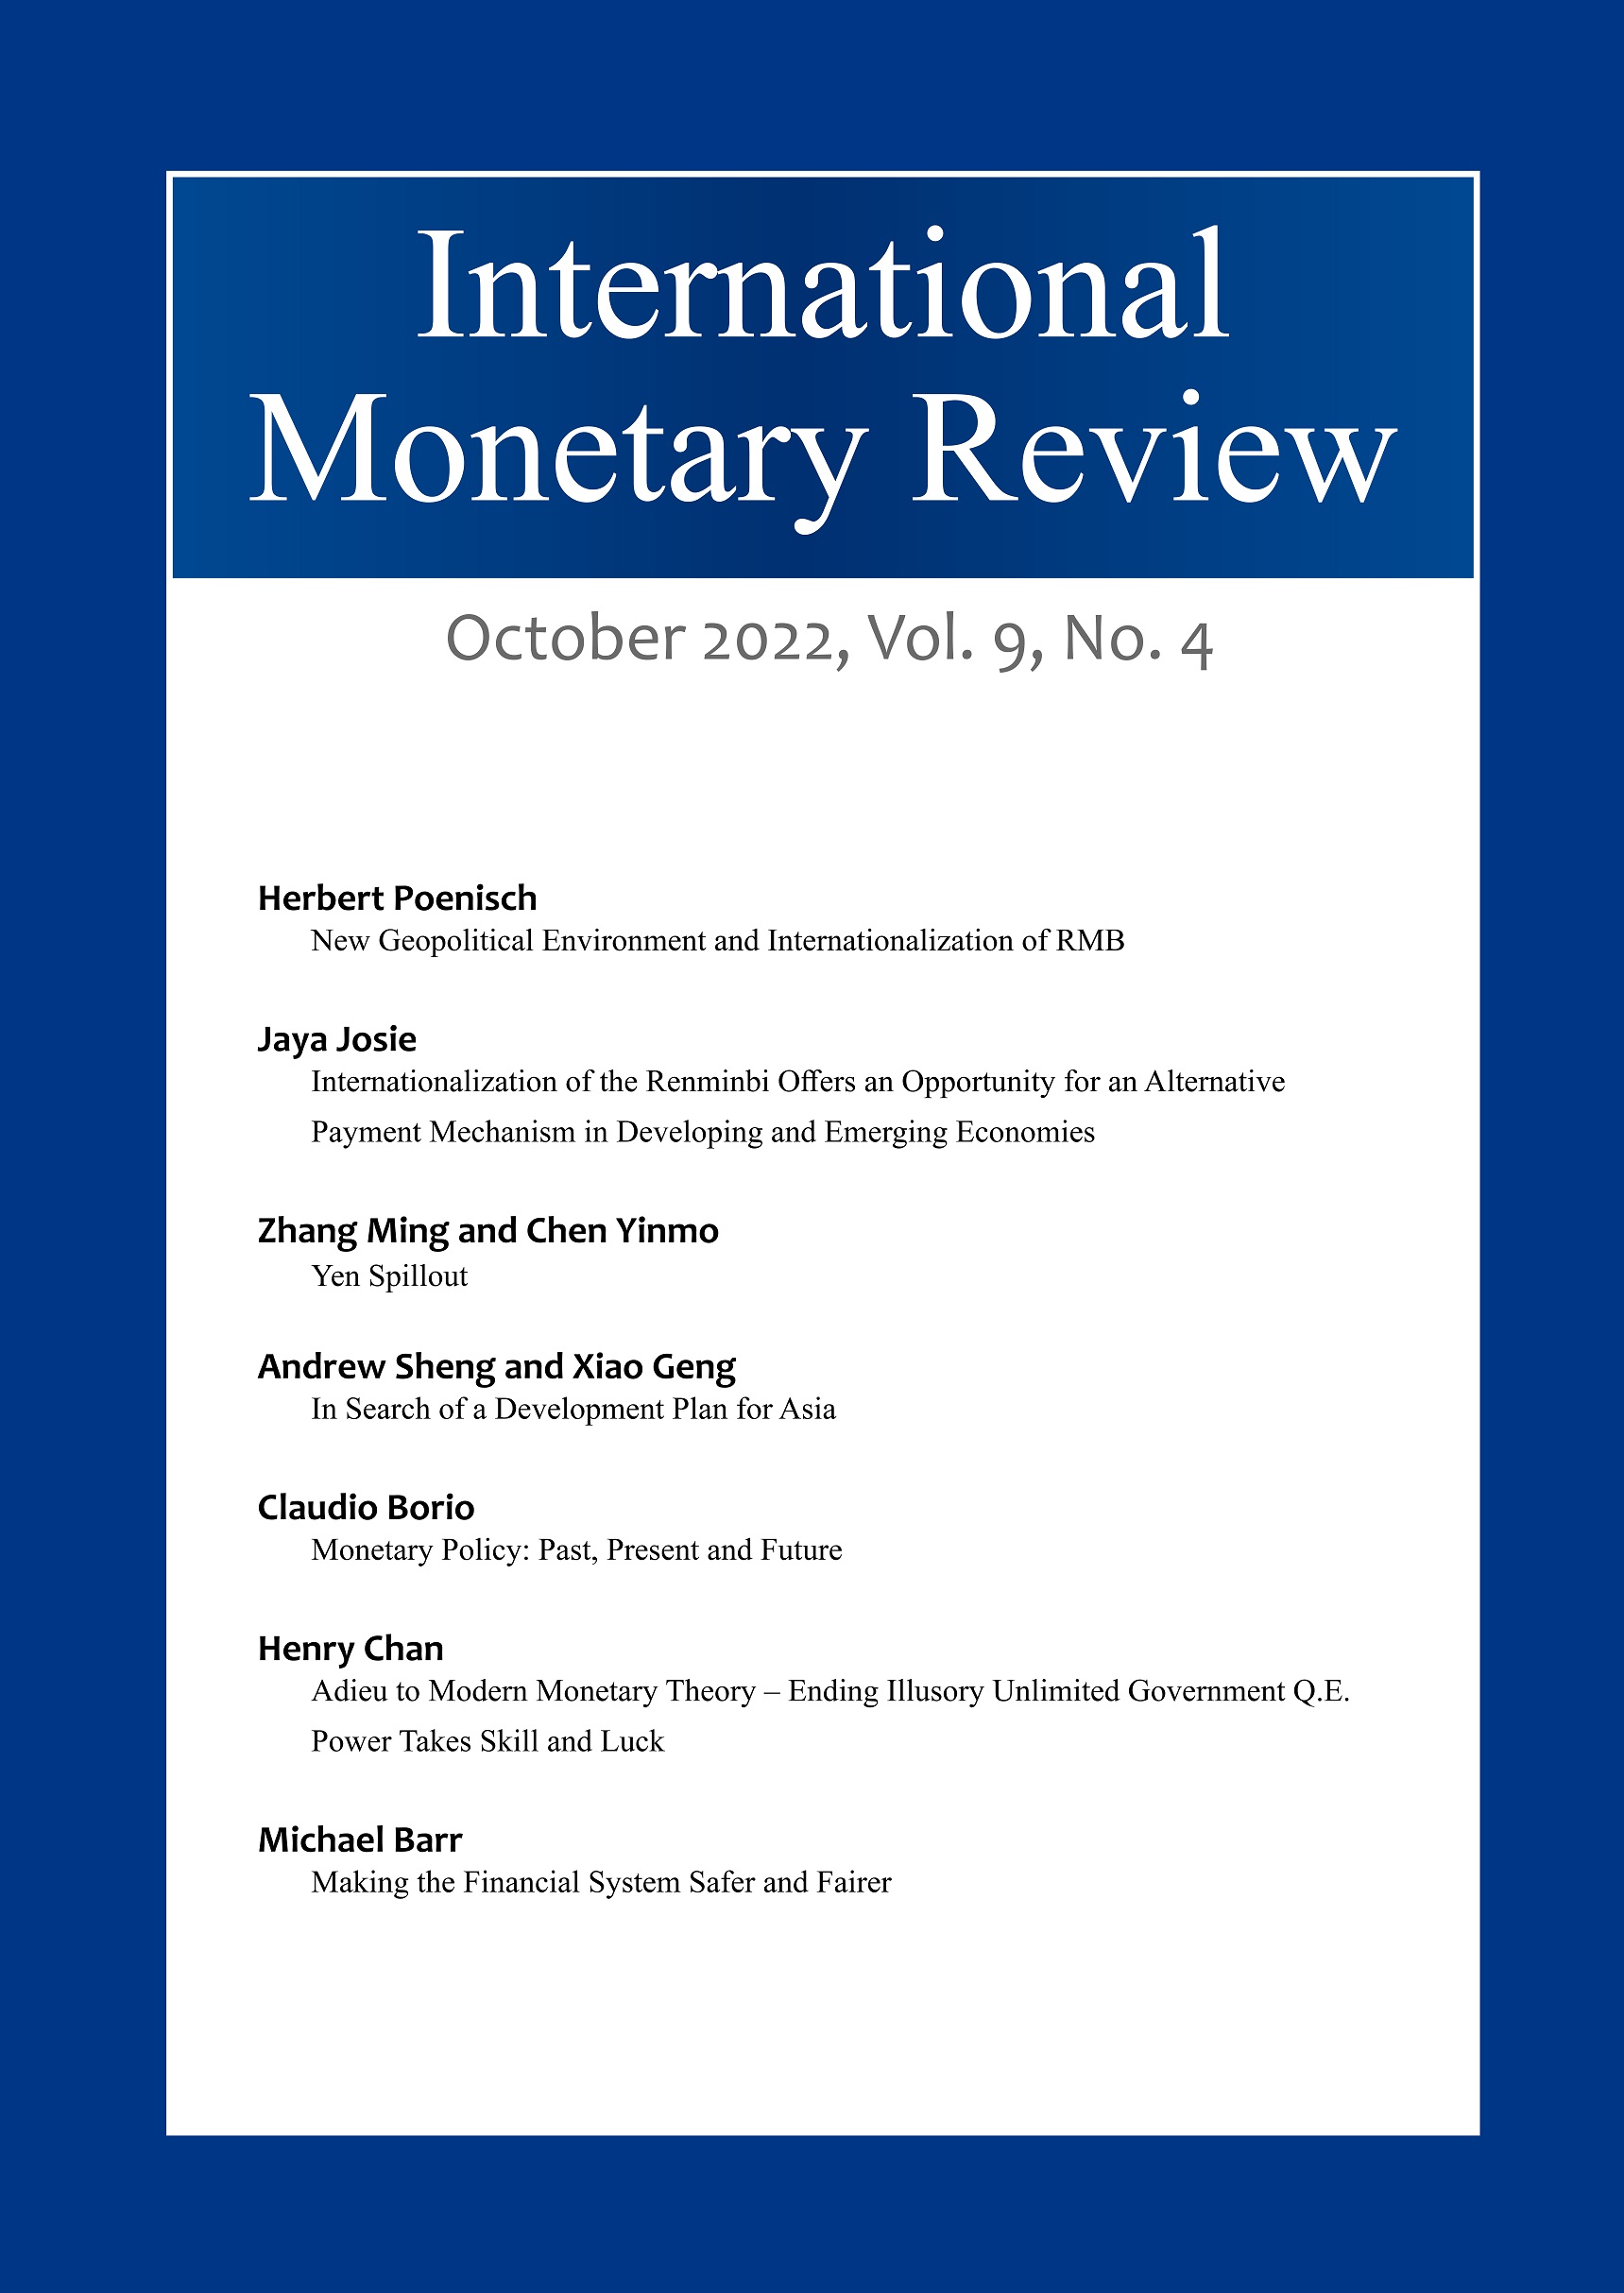 International Monetary Review, October 2022, Vol. 9 No. 4